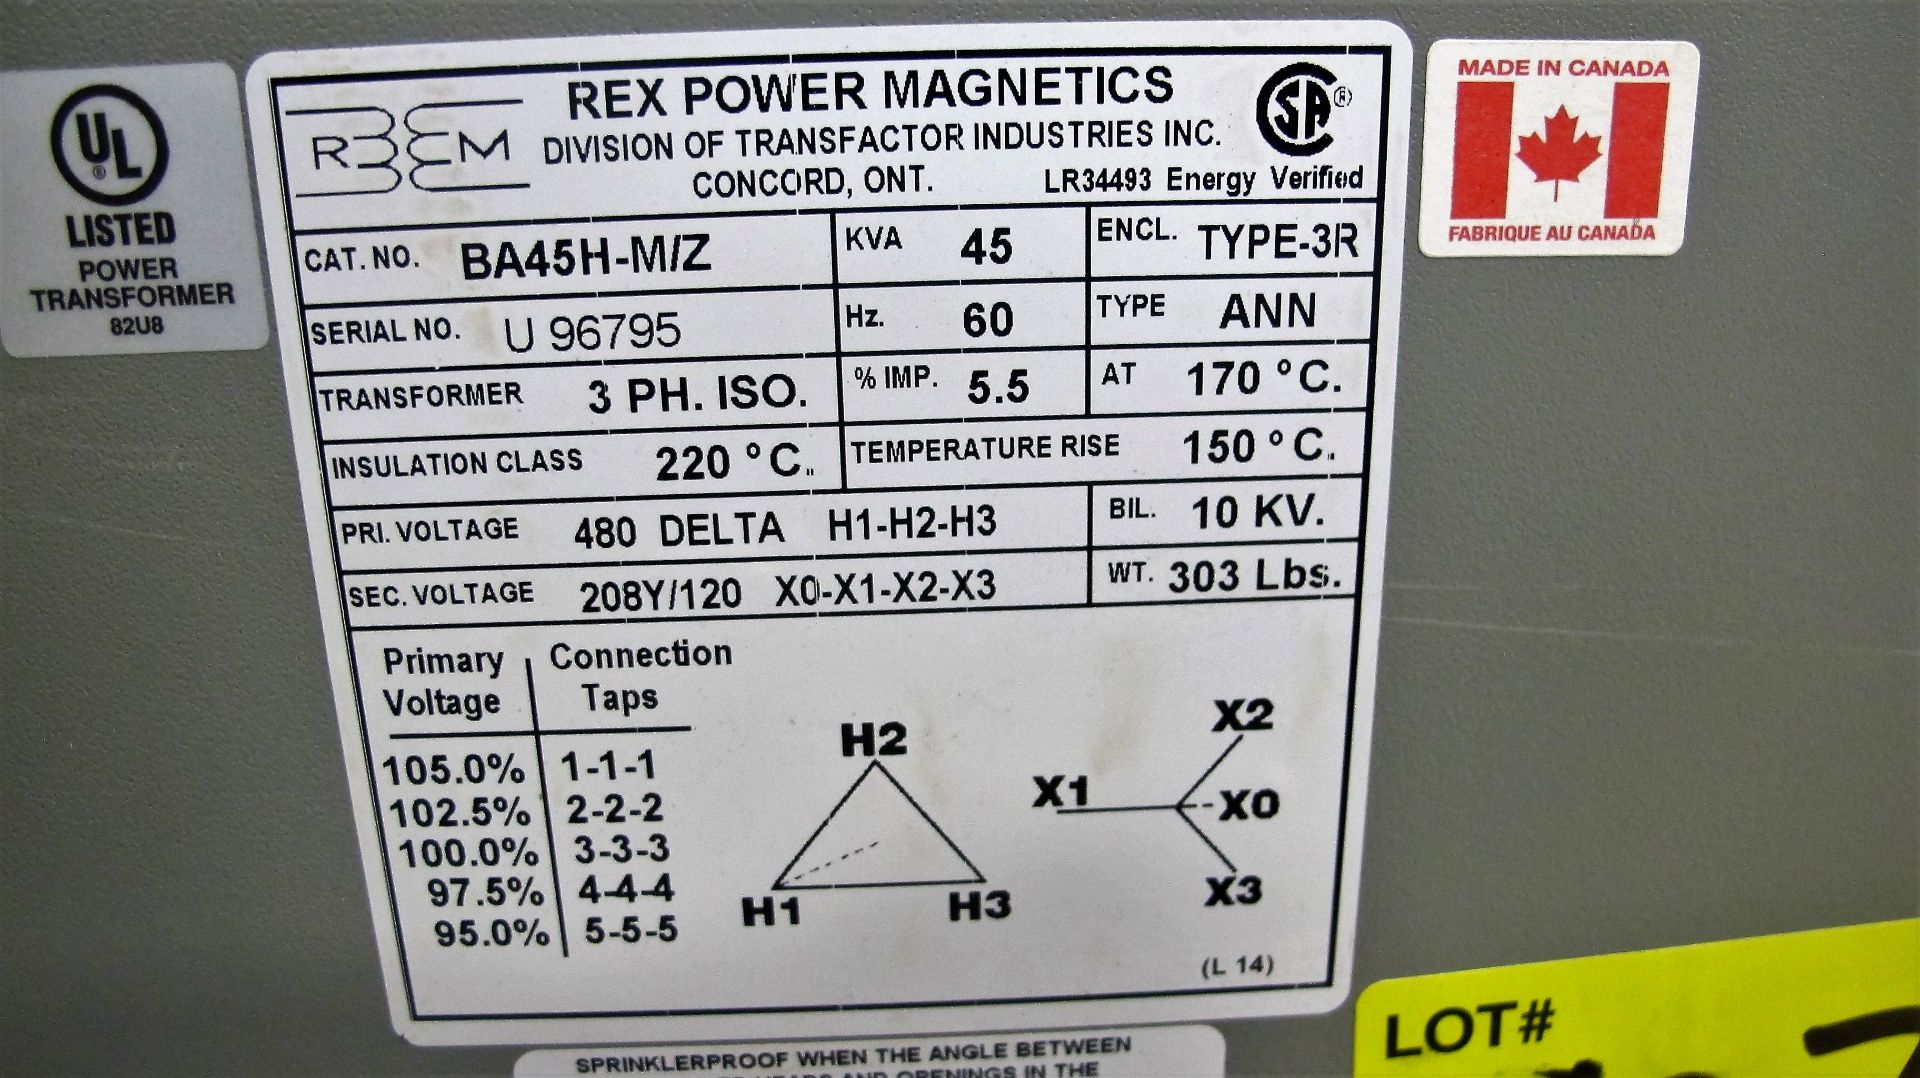 REX POWER MAGNETICS 45KVA TRANSFORMER, 480 PRIMARY, 208/120 SECONDARY - Image 2 of 2